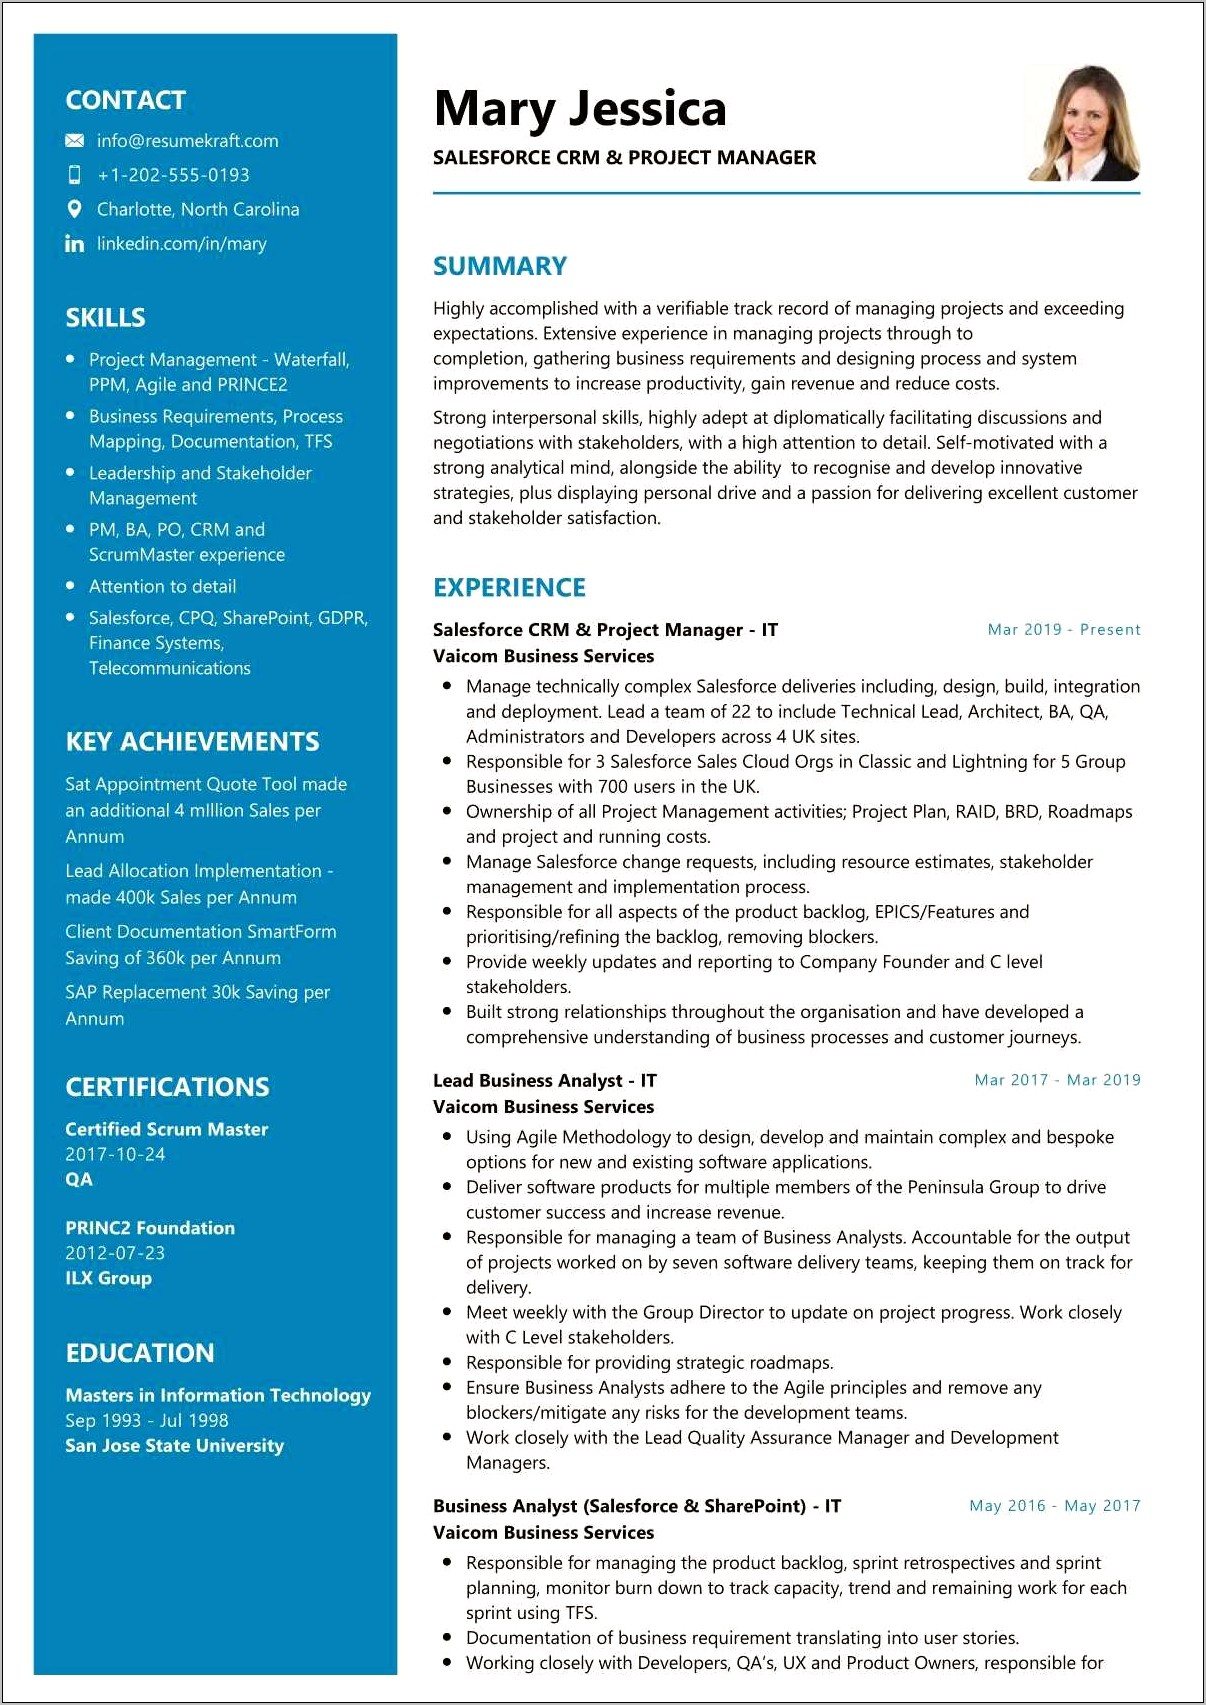 Business Analyst Salesforce Sample Resume